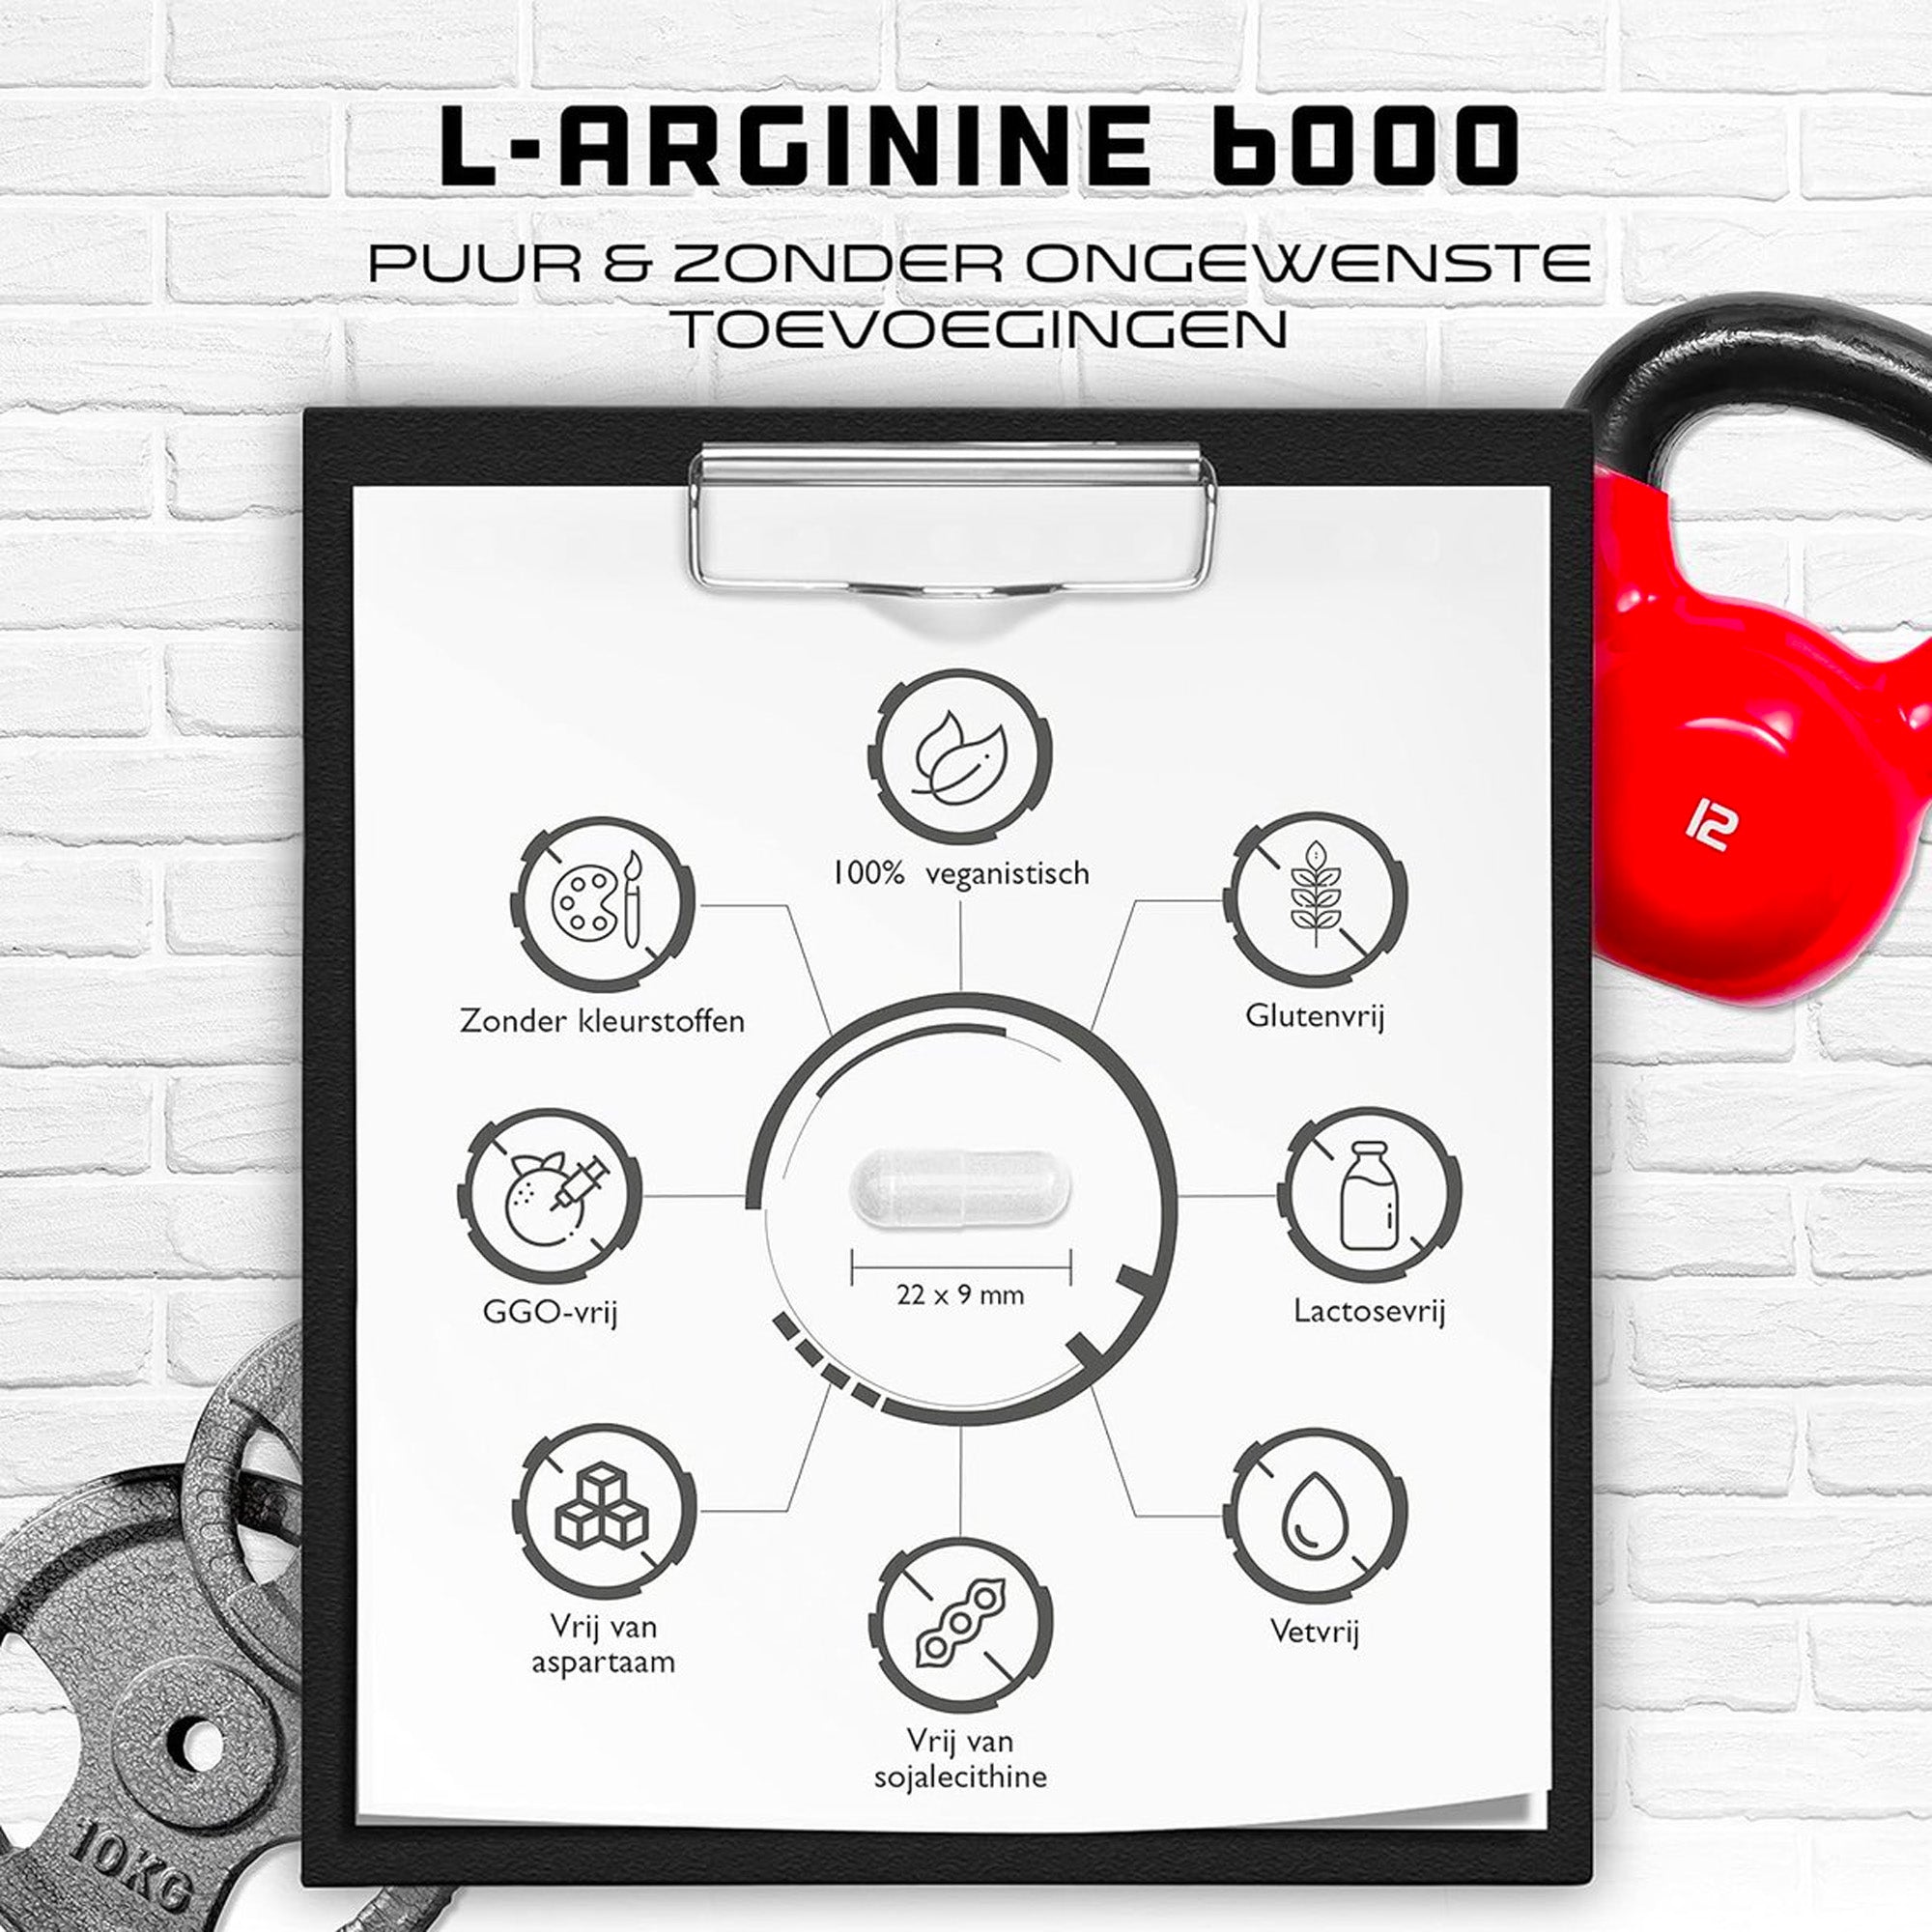 L-Arginine | 380 veganistische capsules | 6000 mg plantaardige L-Arginine HCL per dagelijkse portie (= 4980 mg zuivere L-Arginine) | Aminozuur | Hoog gedoseerd